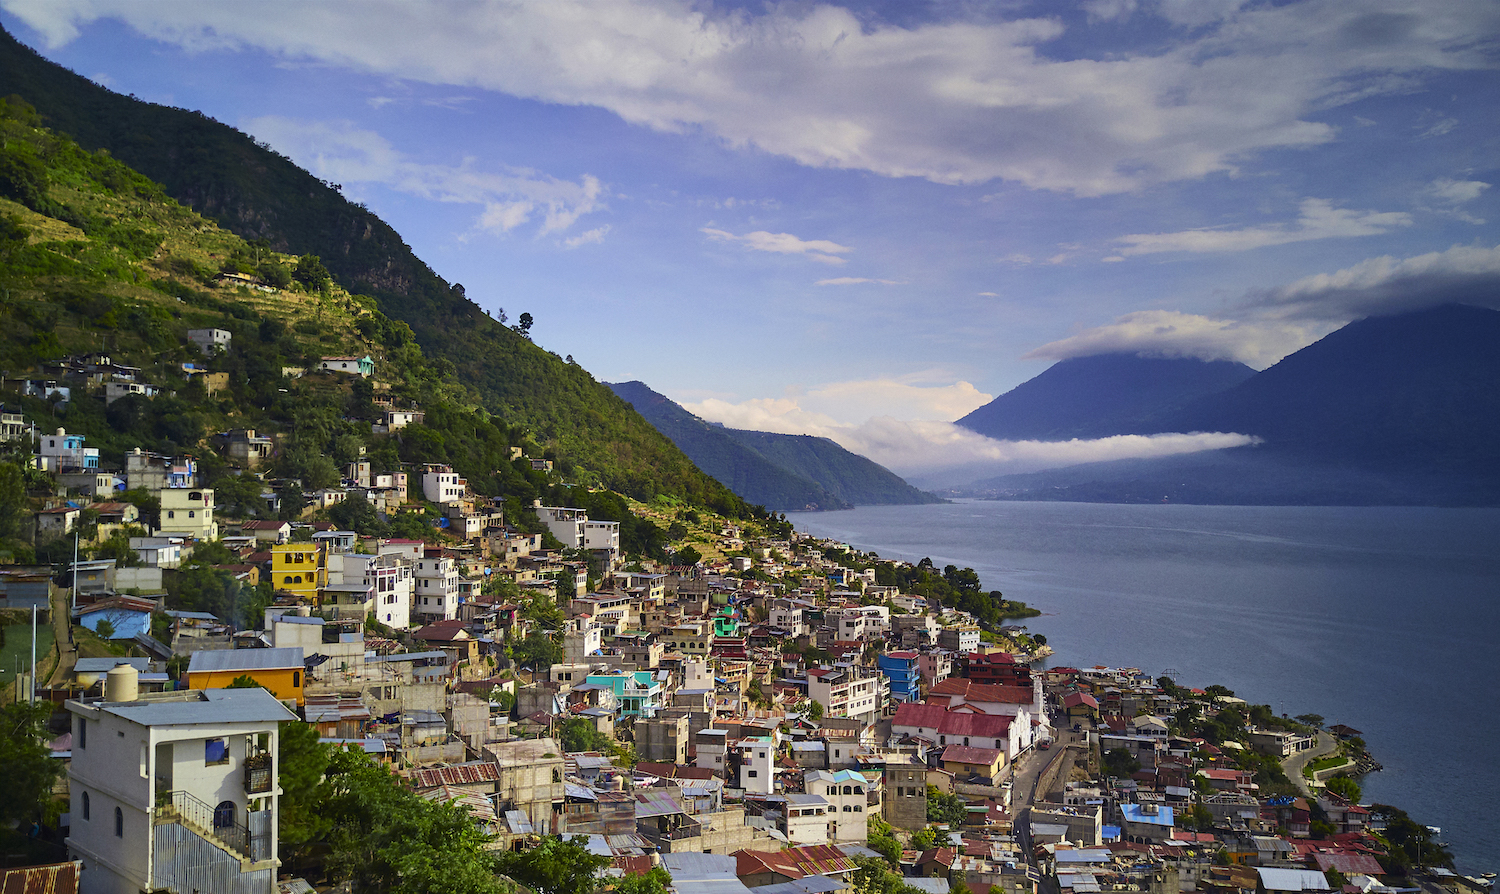 San Diego Photographer Matt Furman's image of Panajachel, Guatemala hillside by the water